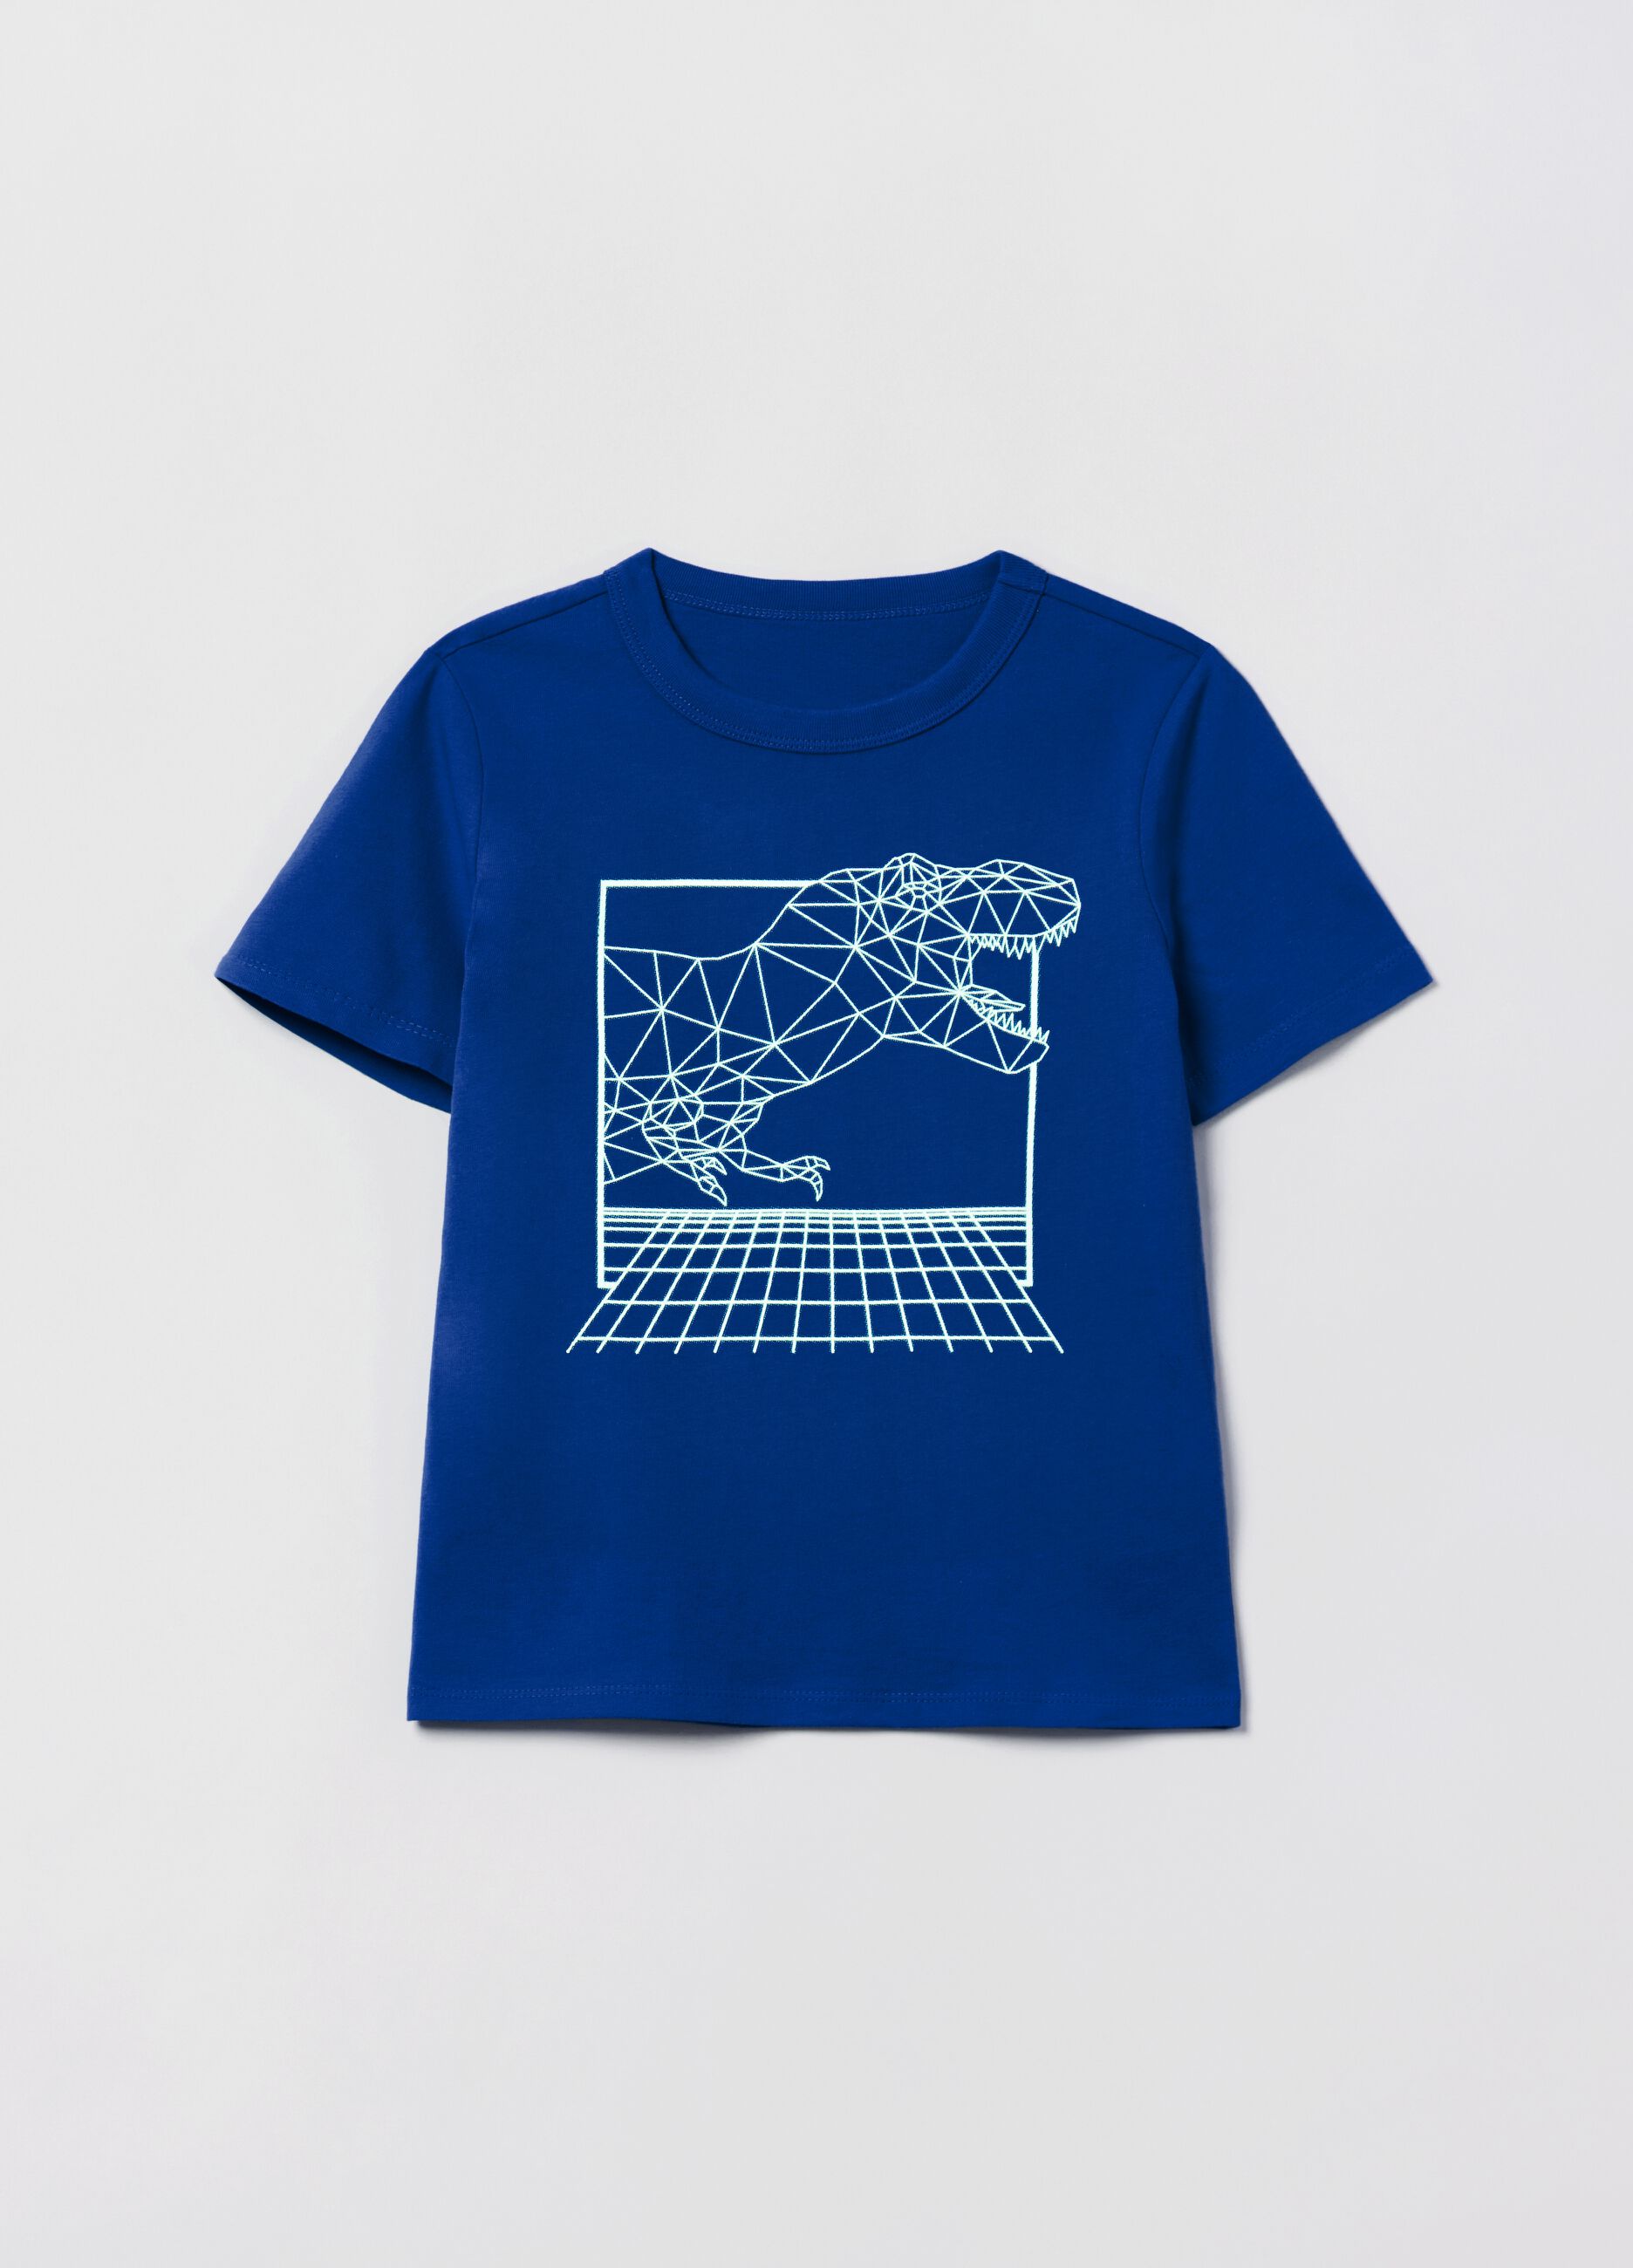 Cotton T-shirt with dinosaur print